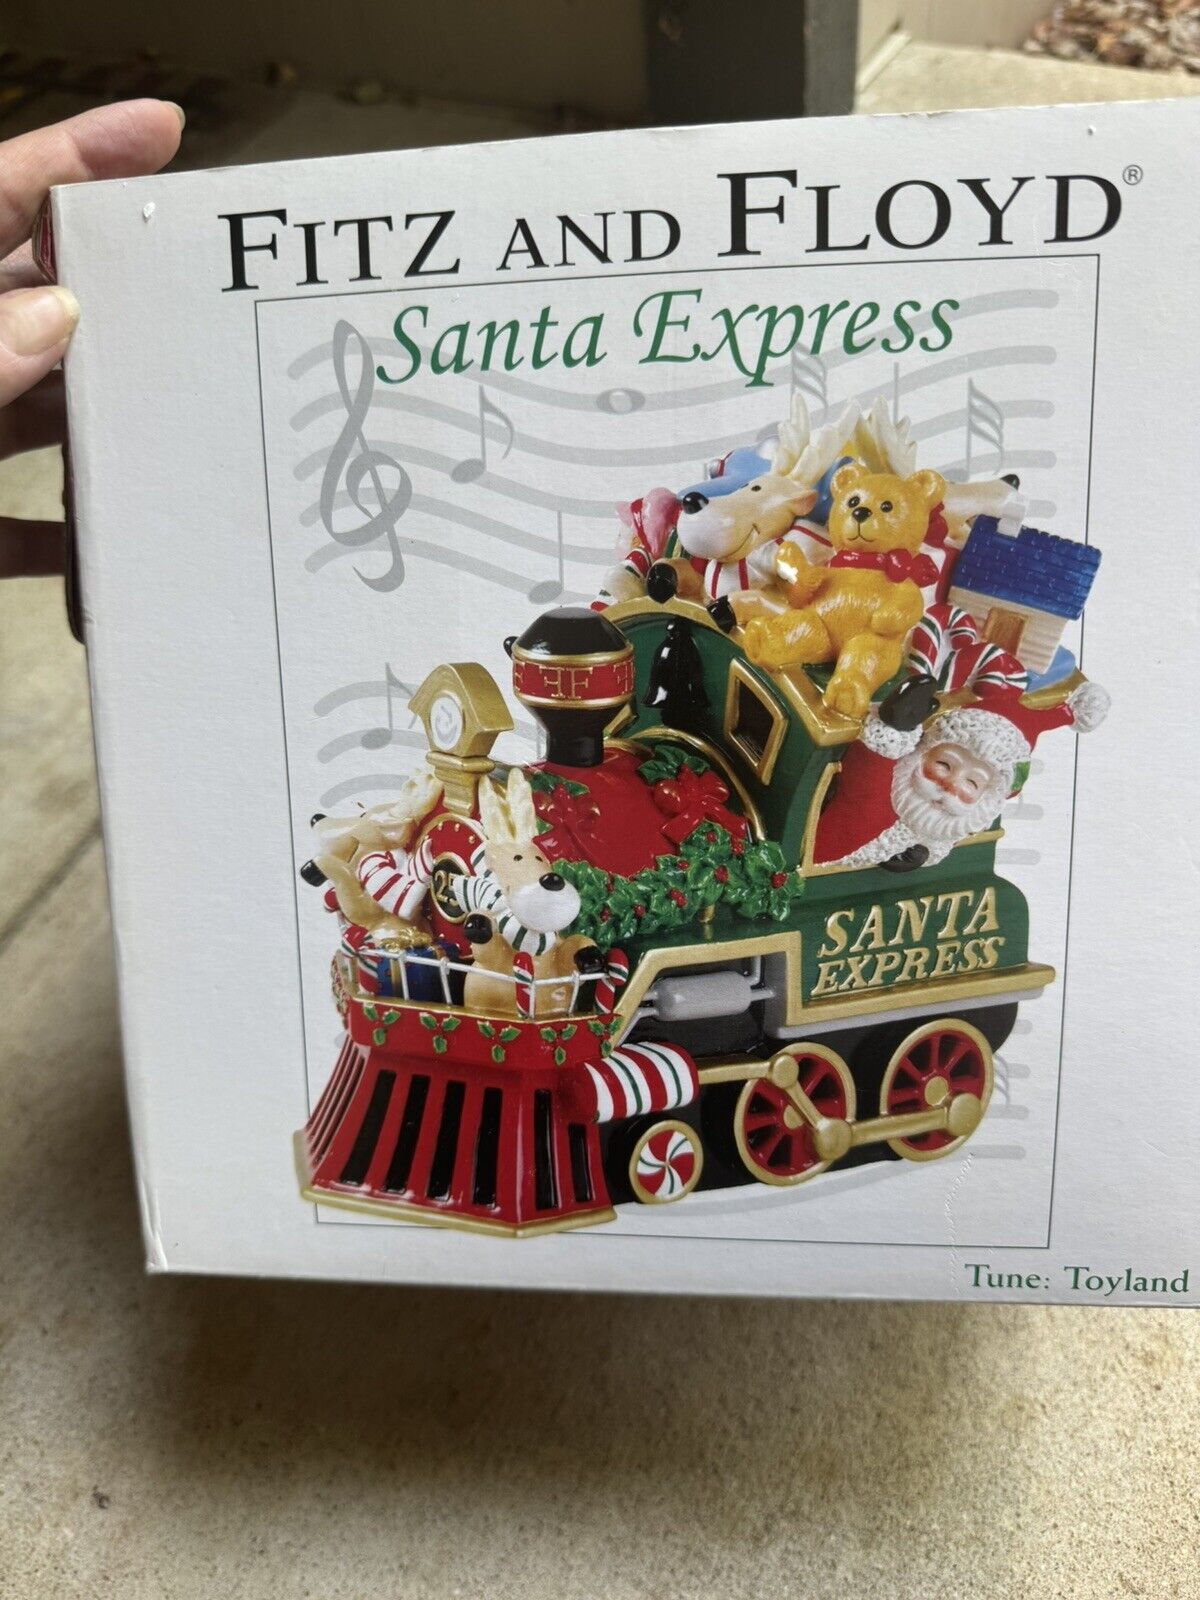 Fitz And Floyd Santa Express Music Box Plays Toyland 2007, Original Box & Foam